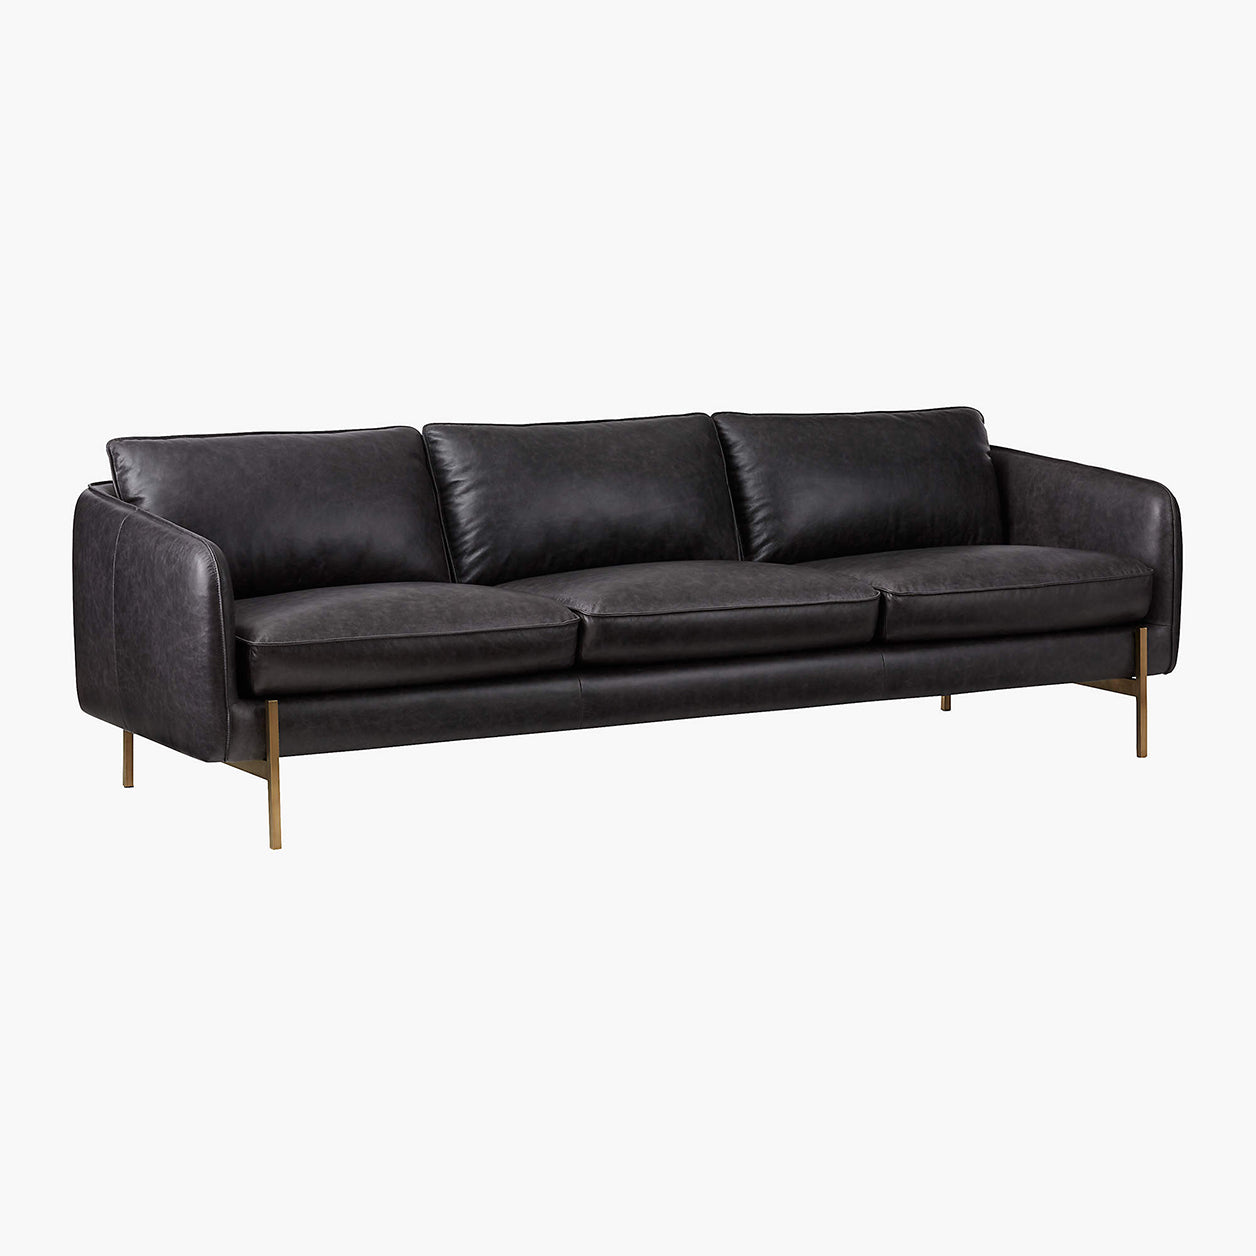 The Standard sofa